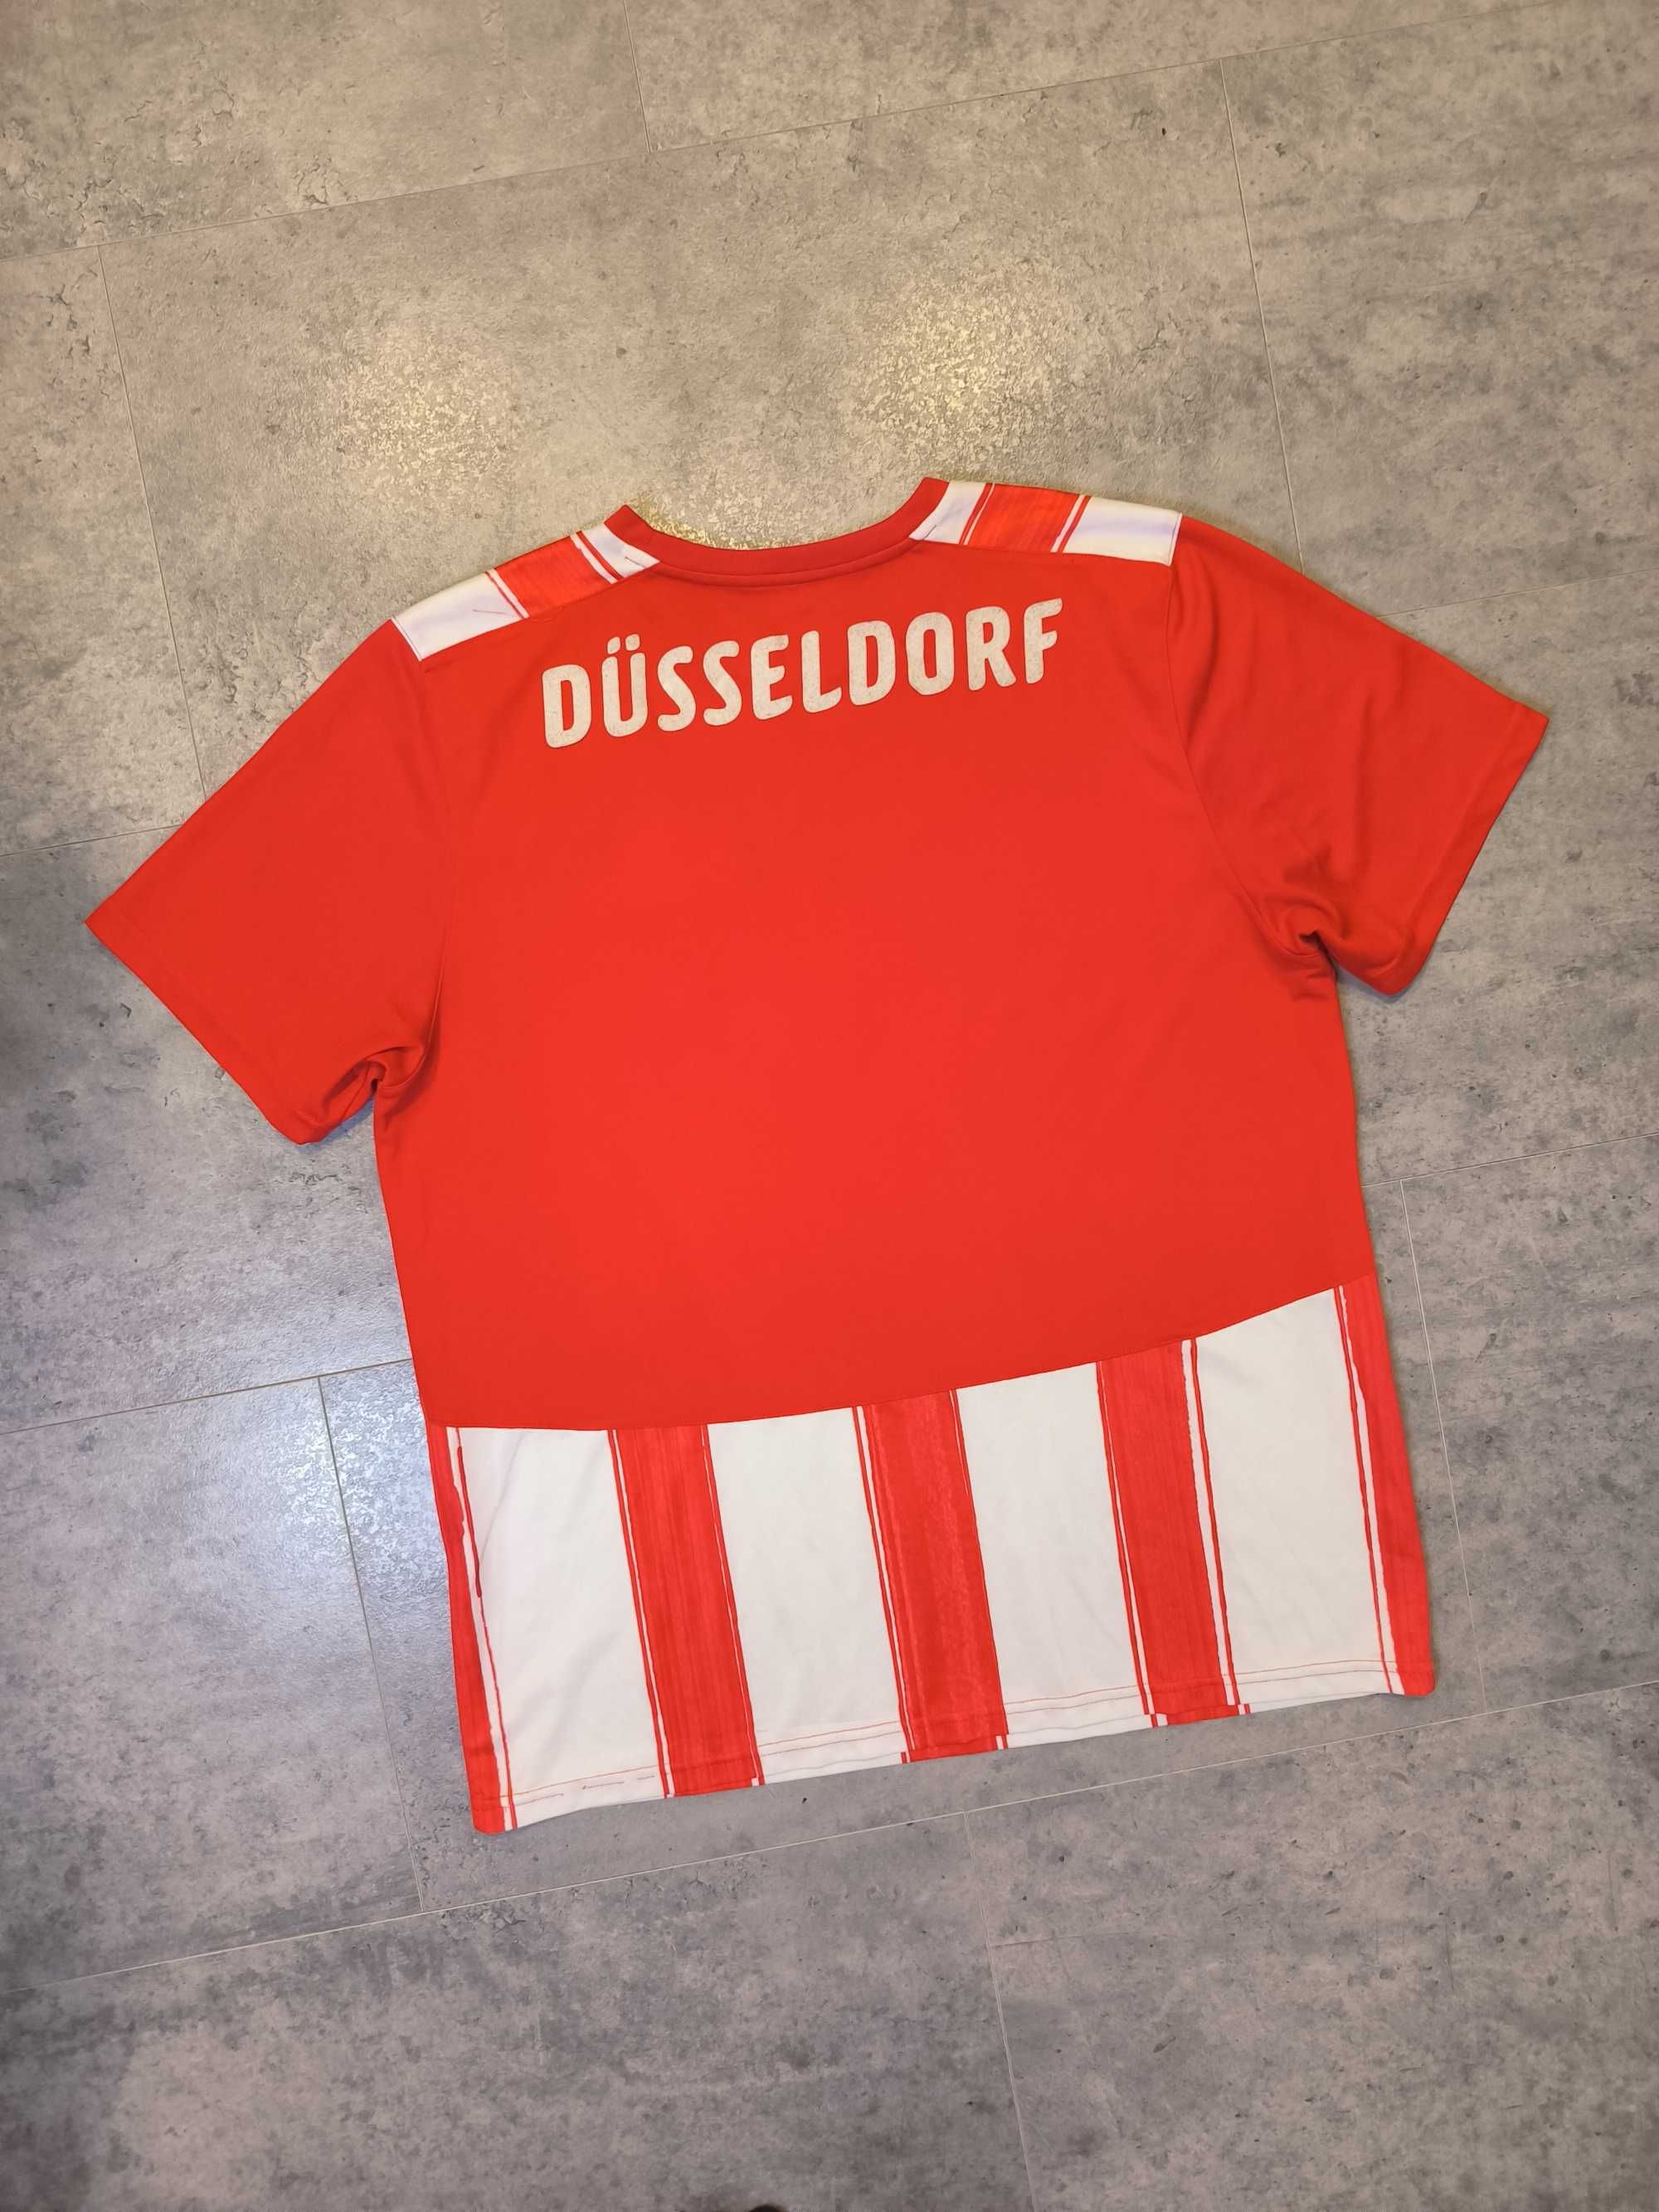 Koszulka Piłkarska Jersey Puma Dusseldorf